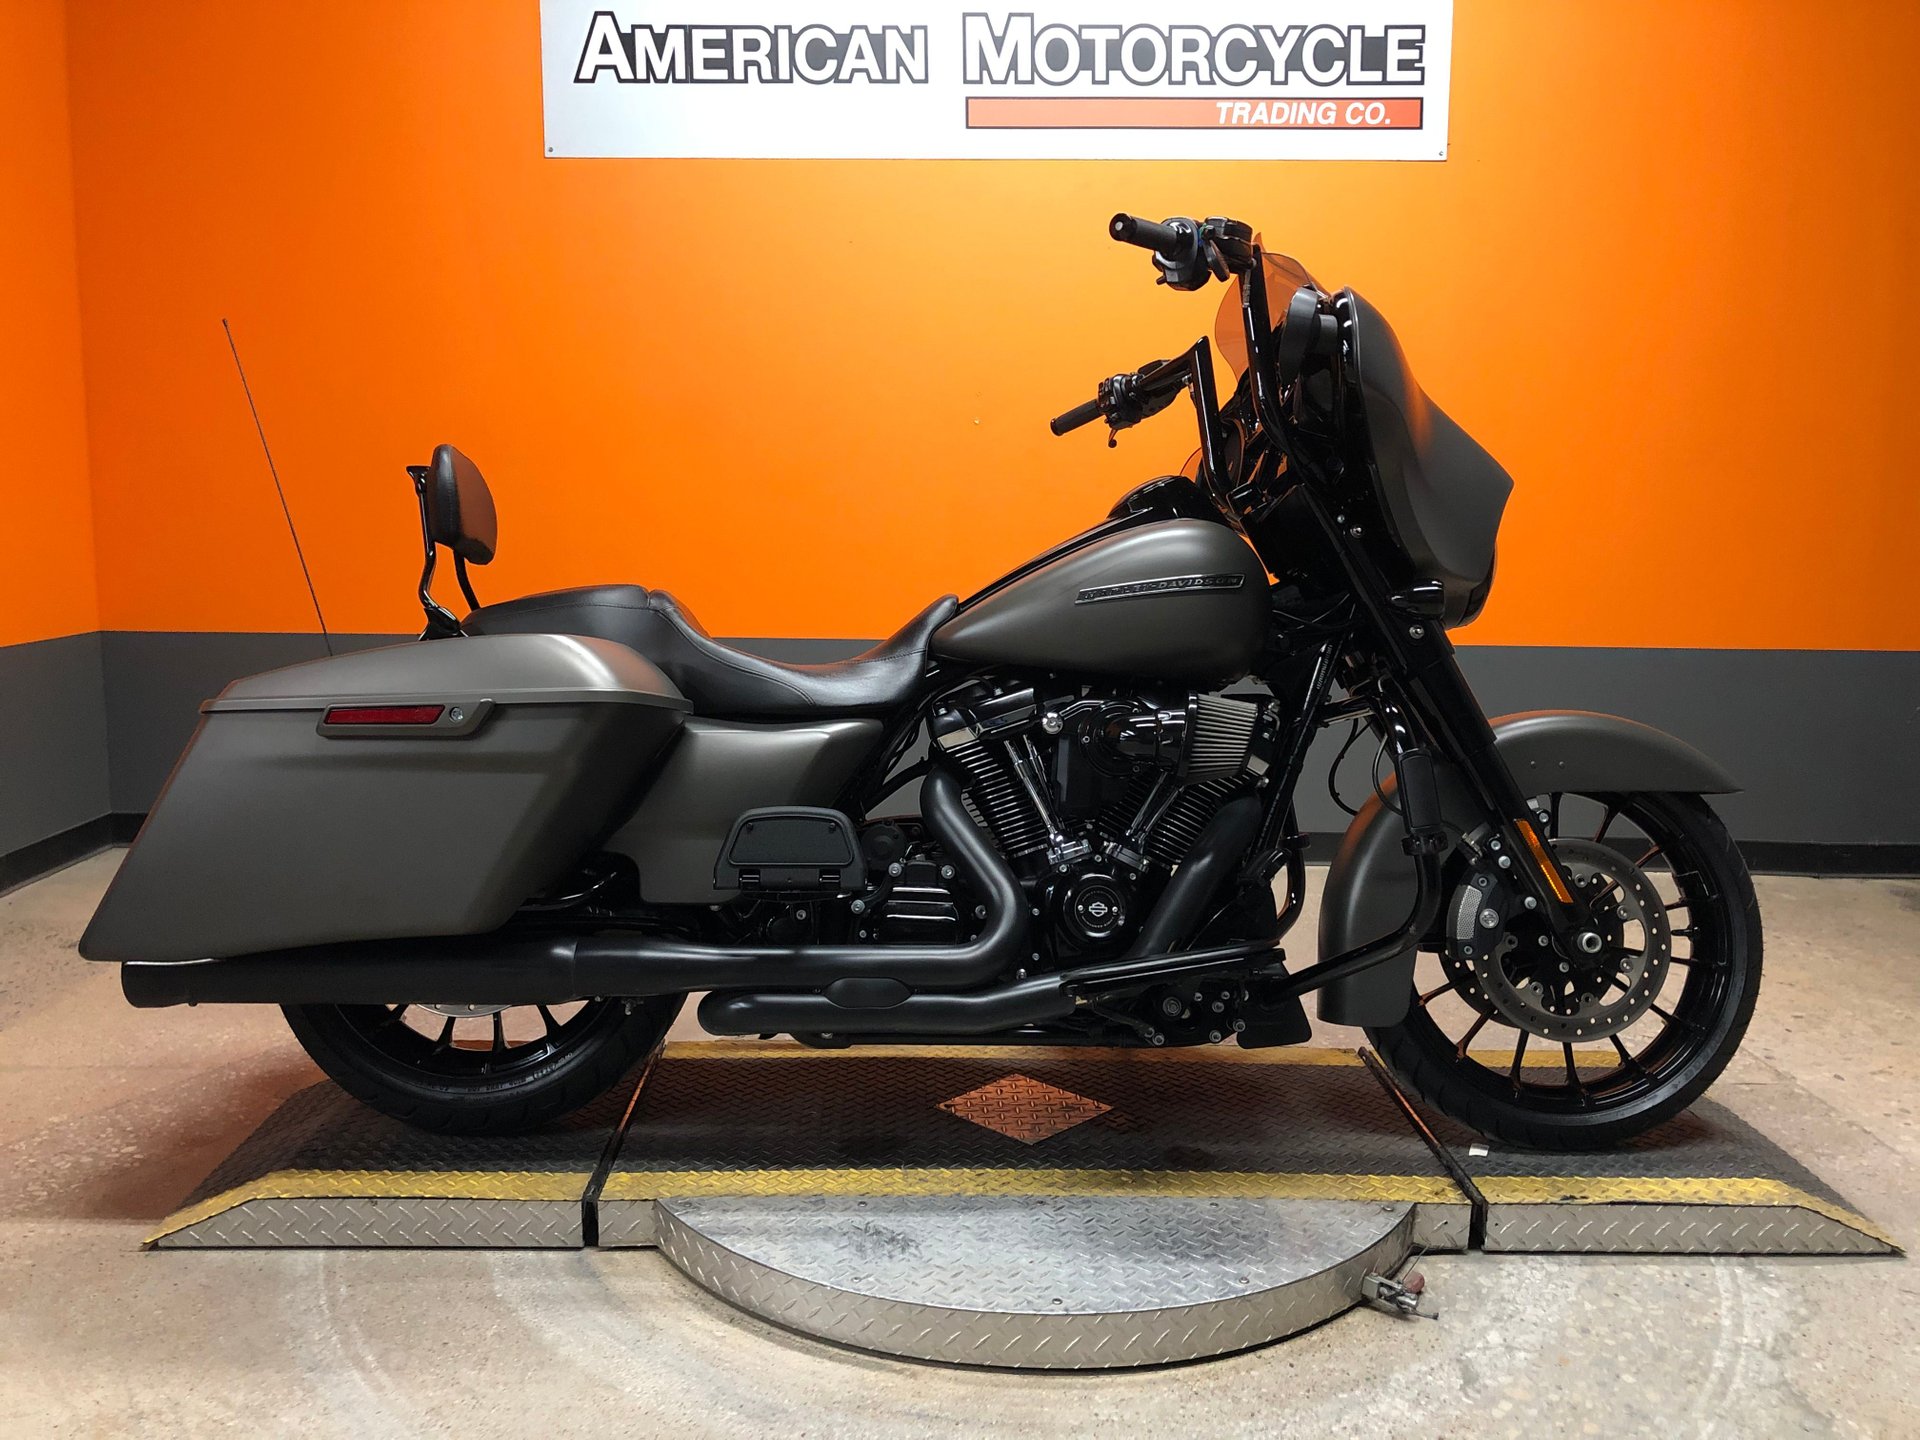 2019 Harley Davidson Street Glide American Motorcycle Trading Company Used Harley Davidson Motorcycles